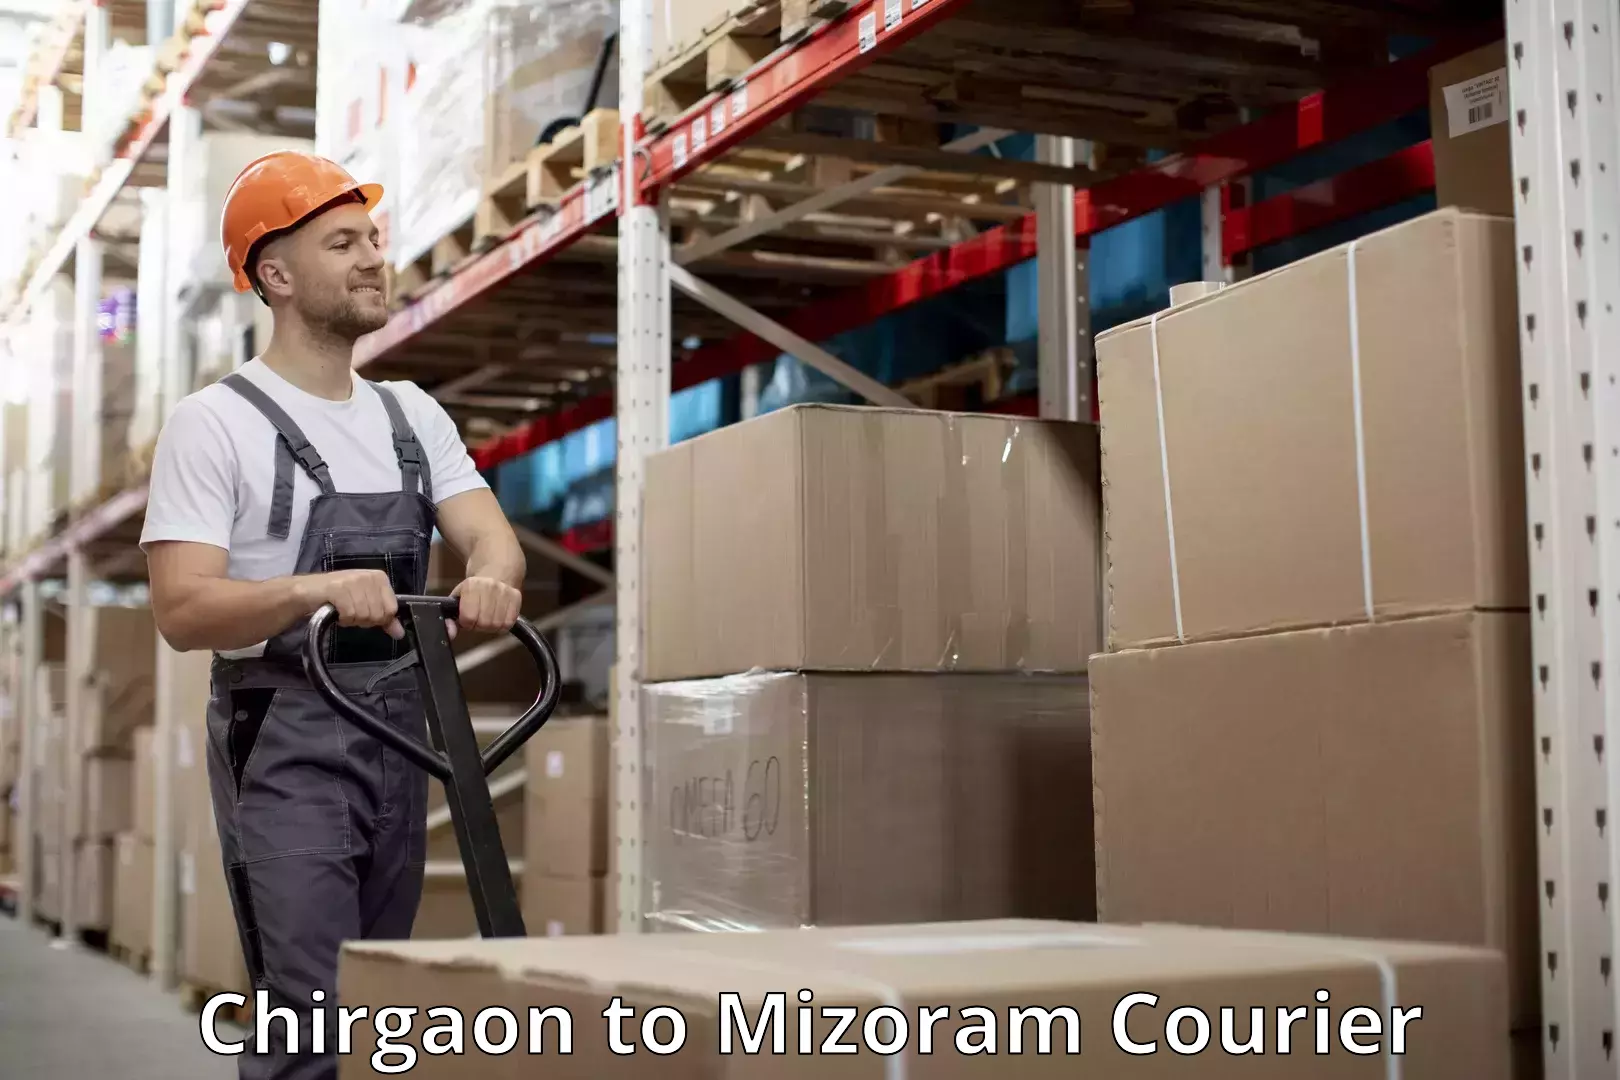 Luggage shipment specialists Chirgaon to Mizoram